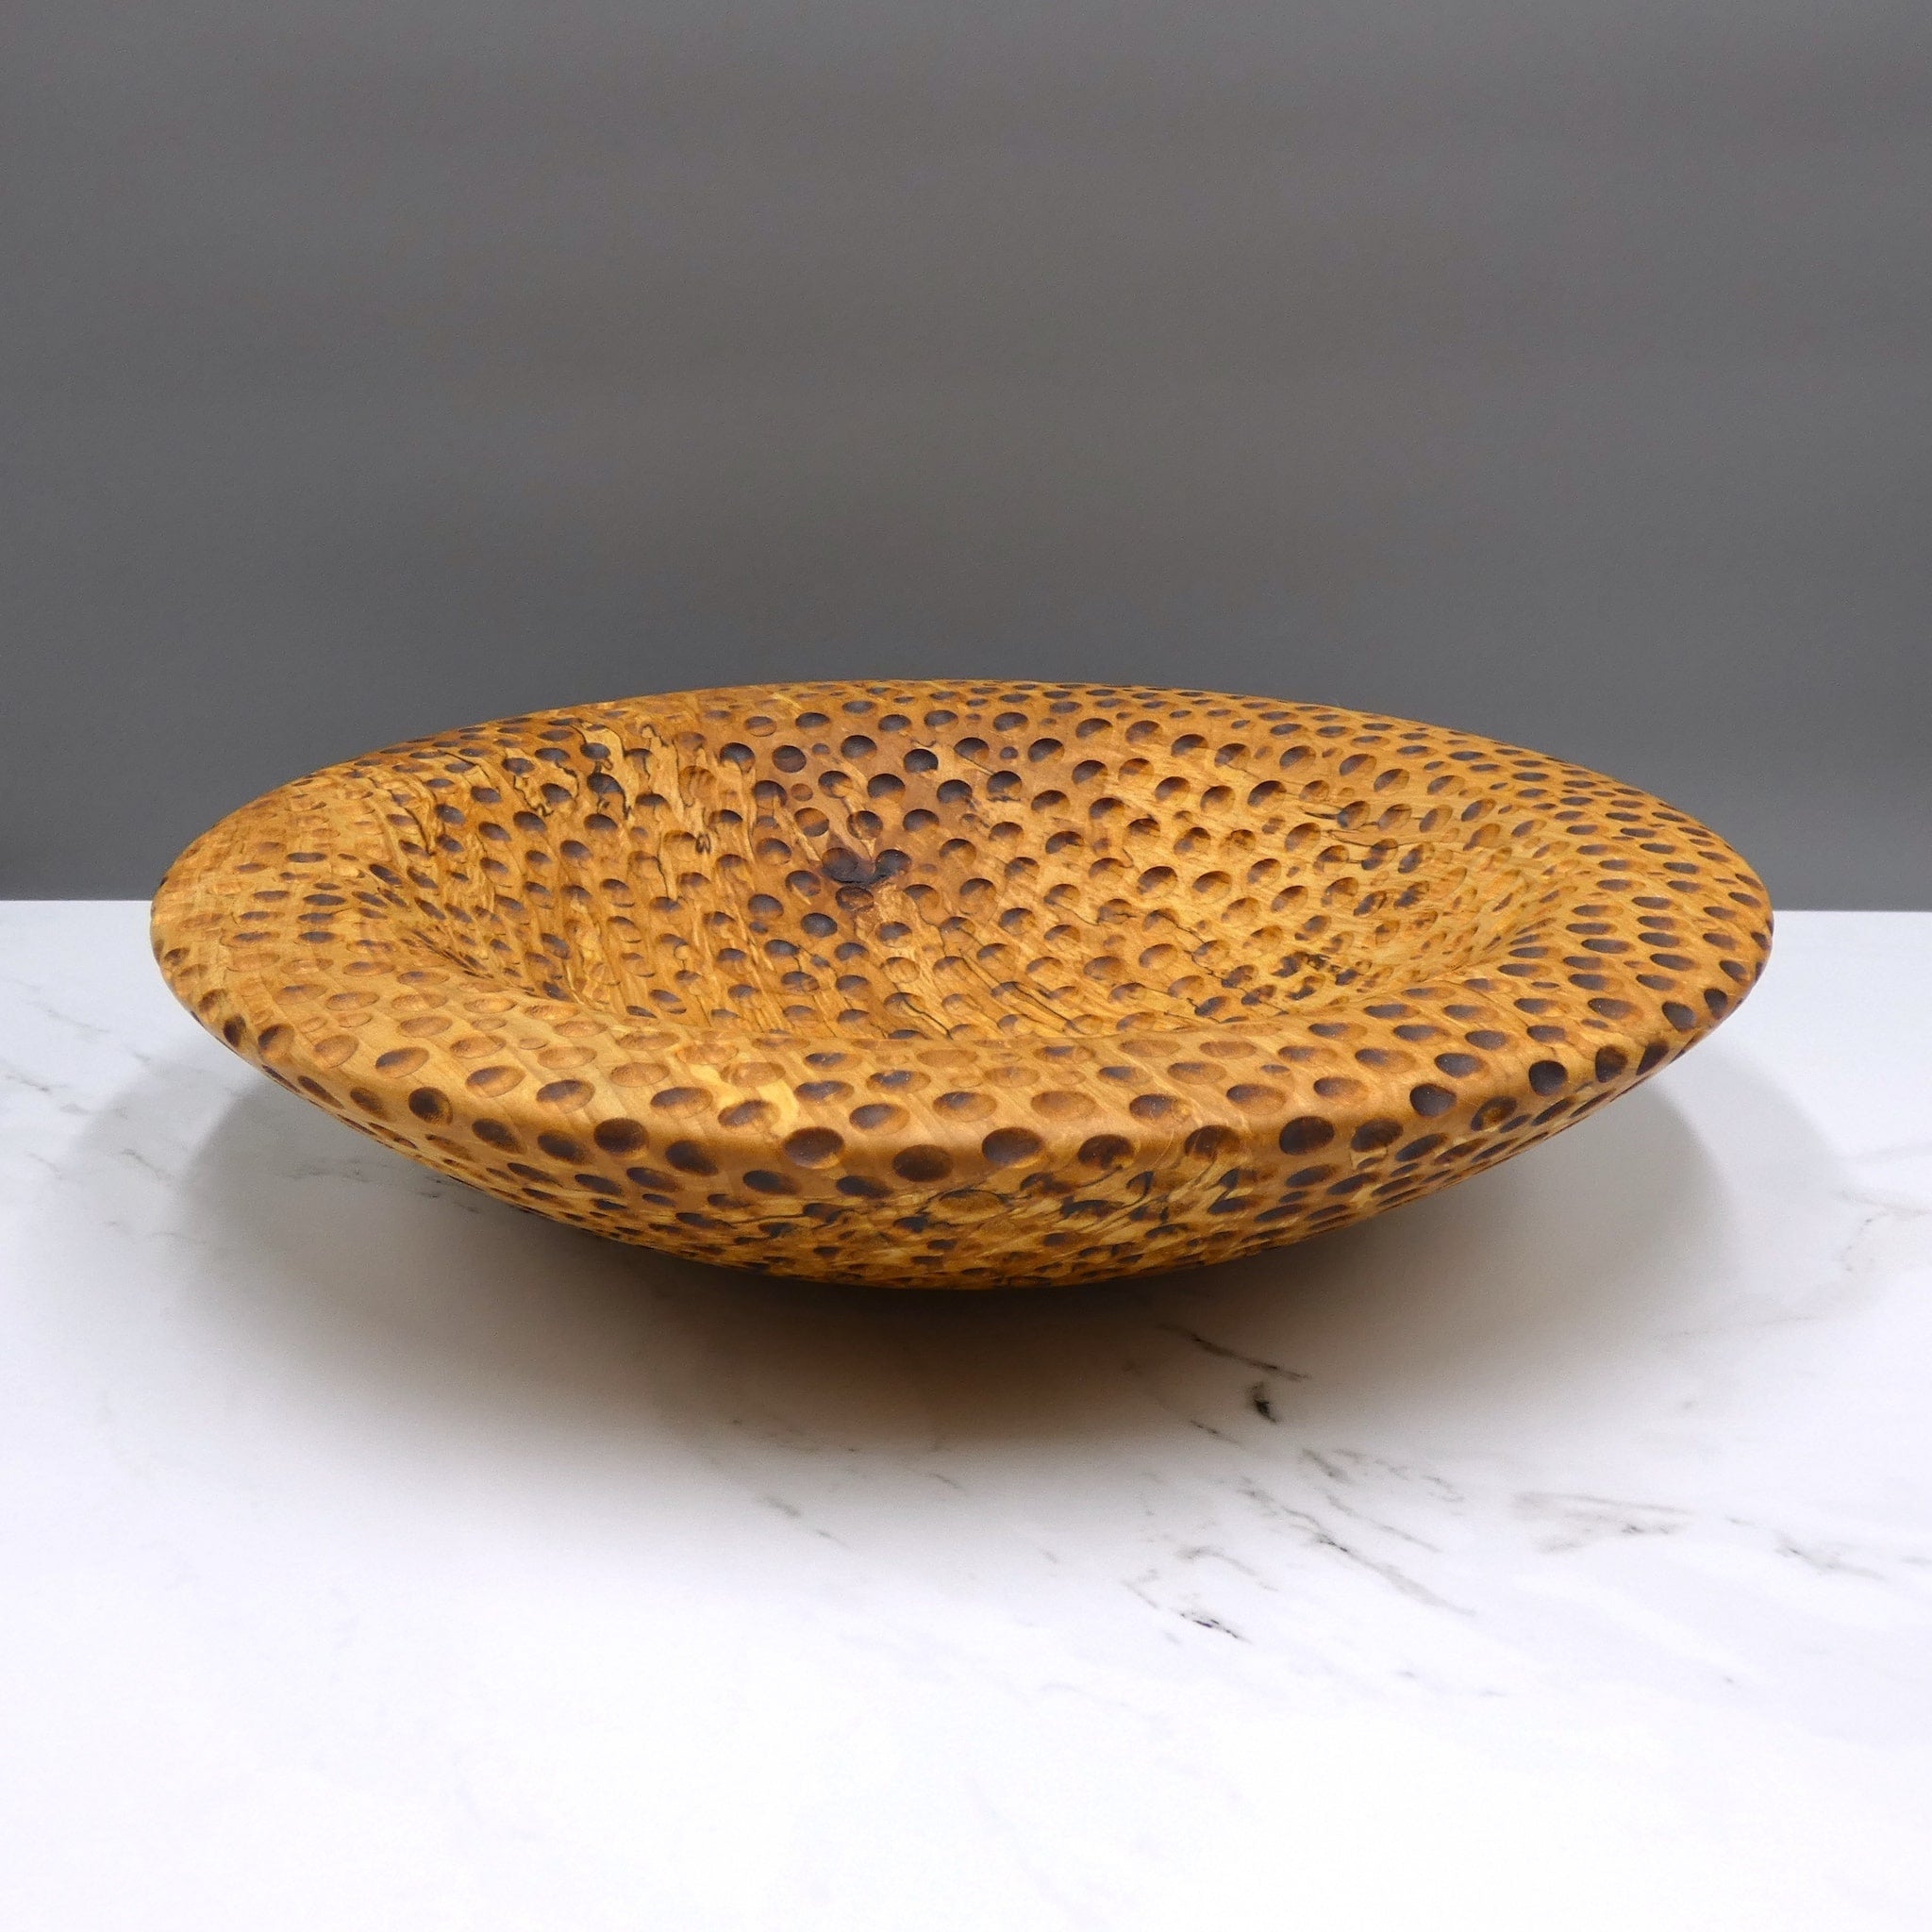 Dimpled alder bowl by woodturner Howard Moody